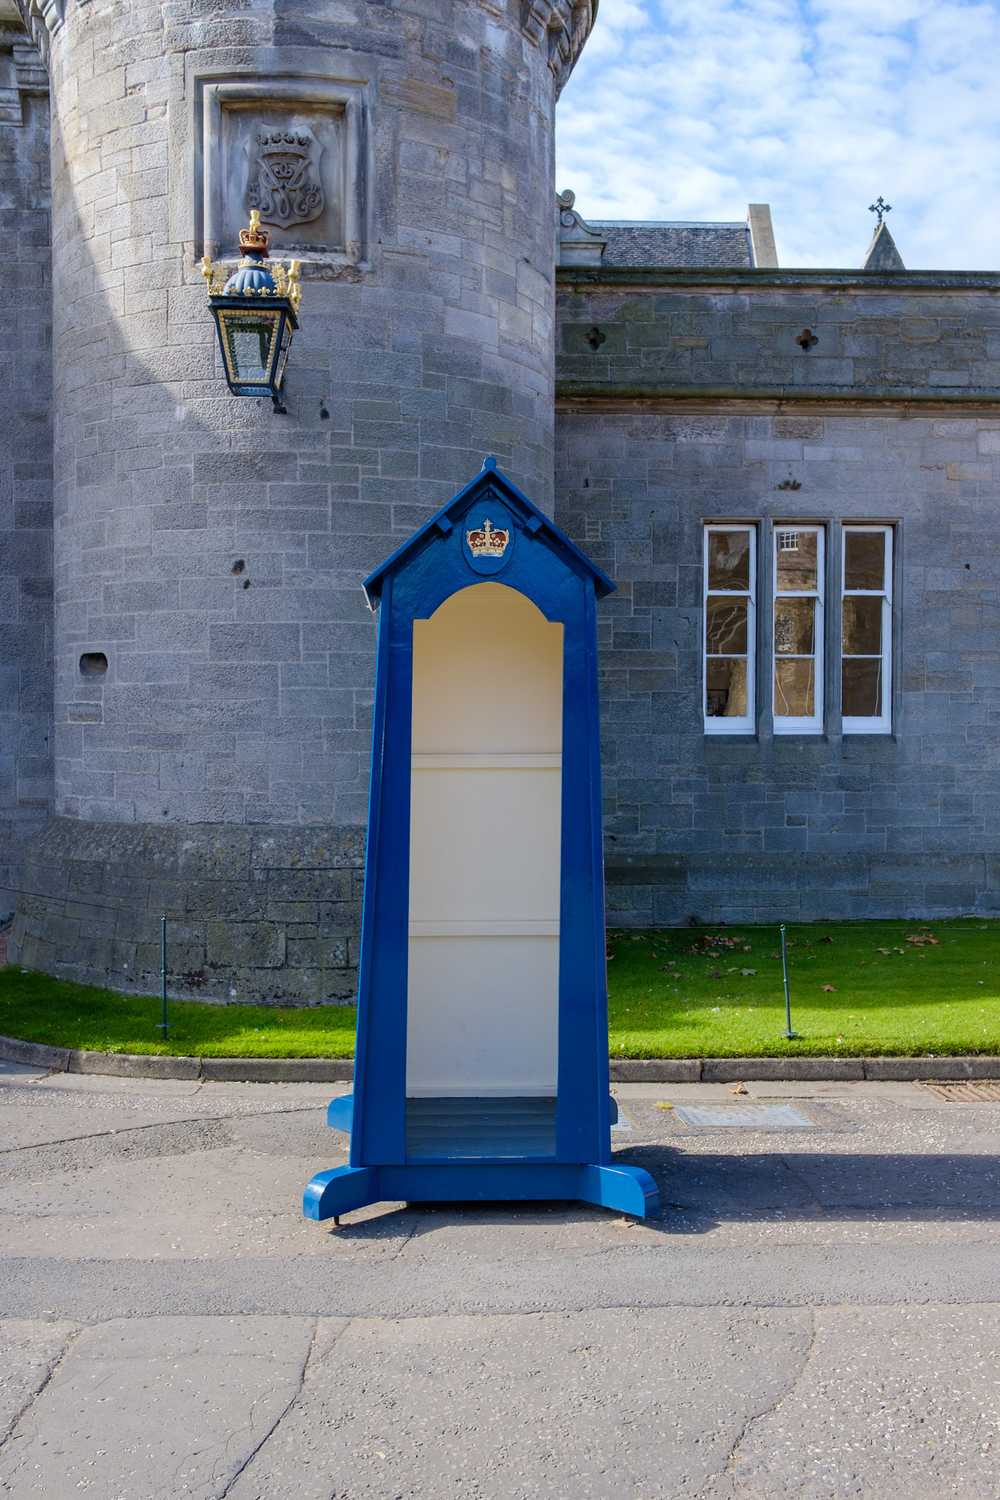 Guard booth, Palace of Holyroodhouse, Edinburgh